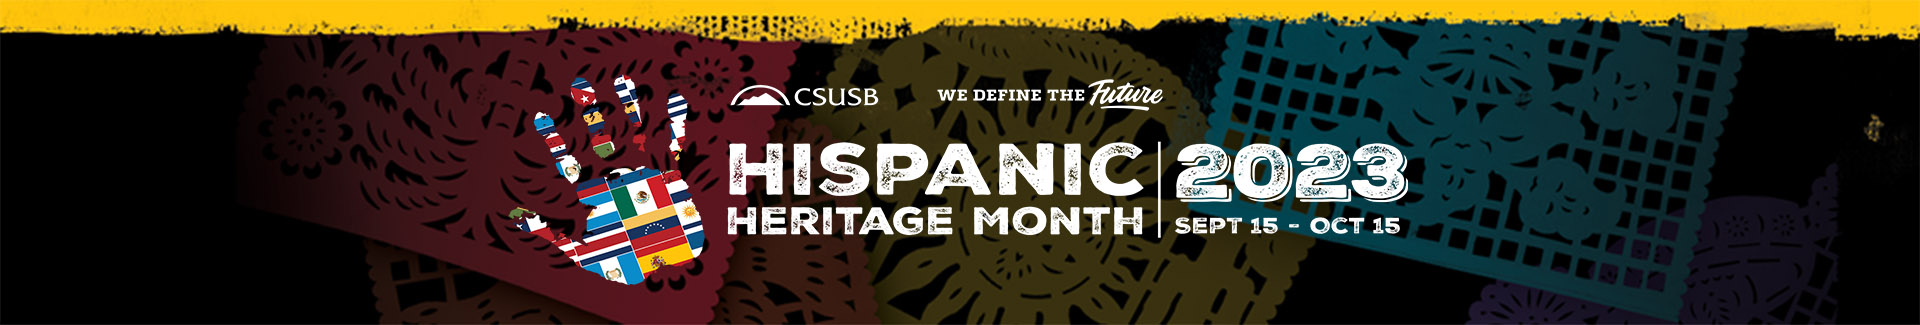 Hispanic Heritage Month Web Banner